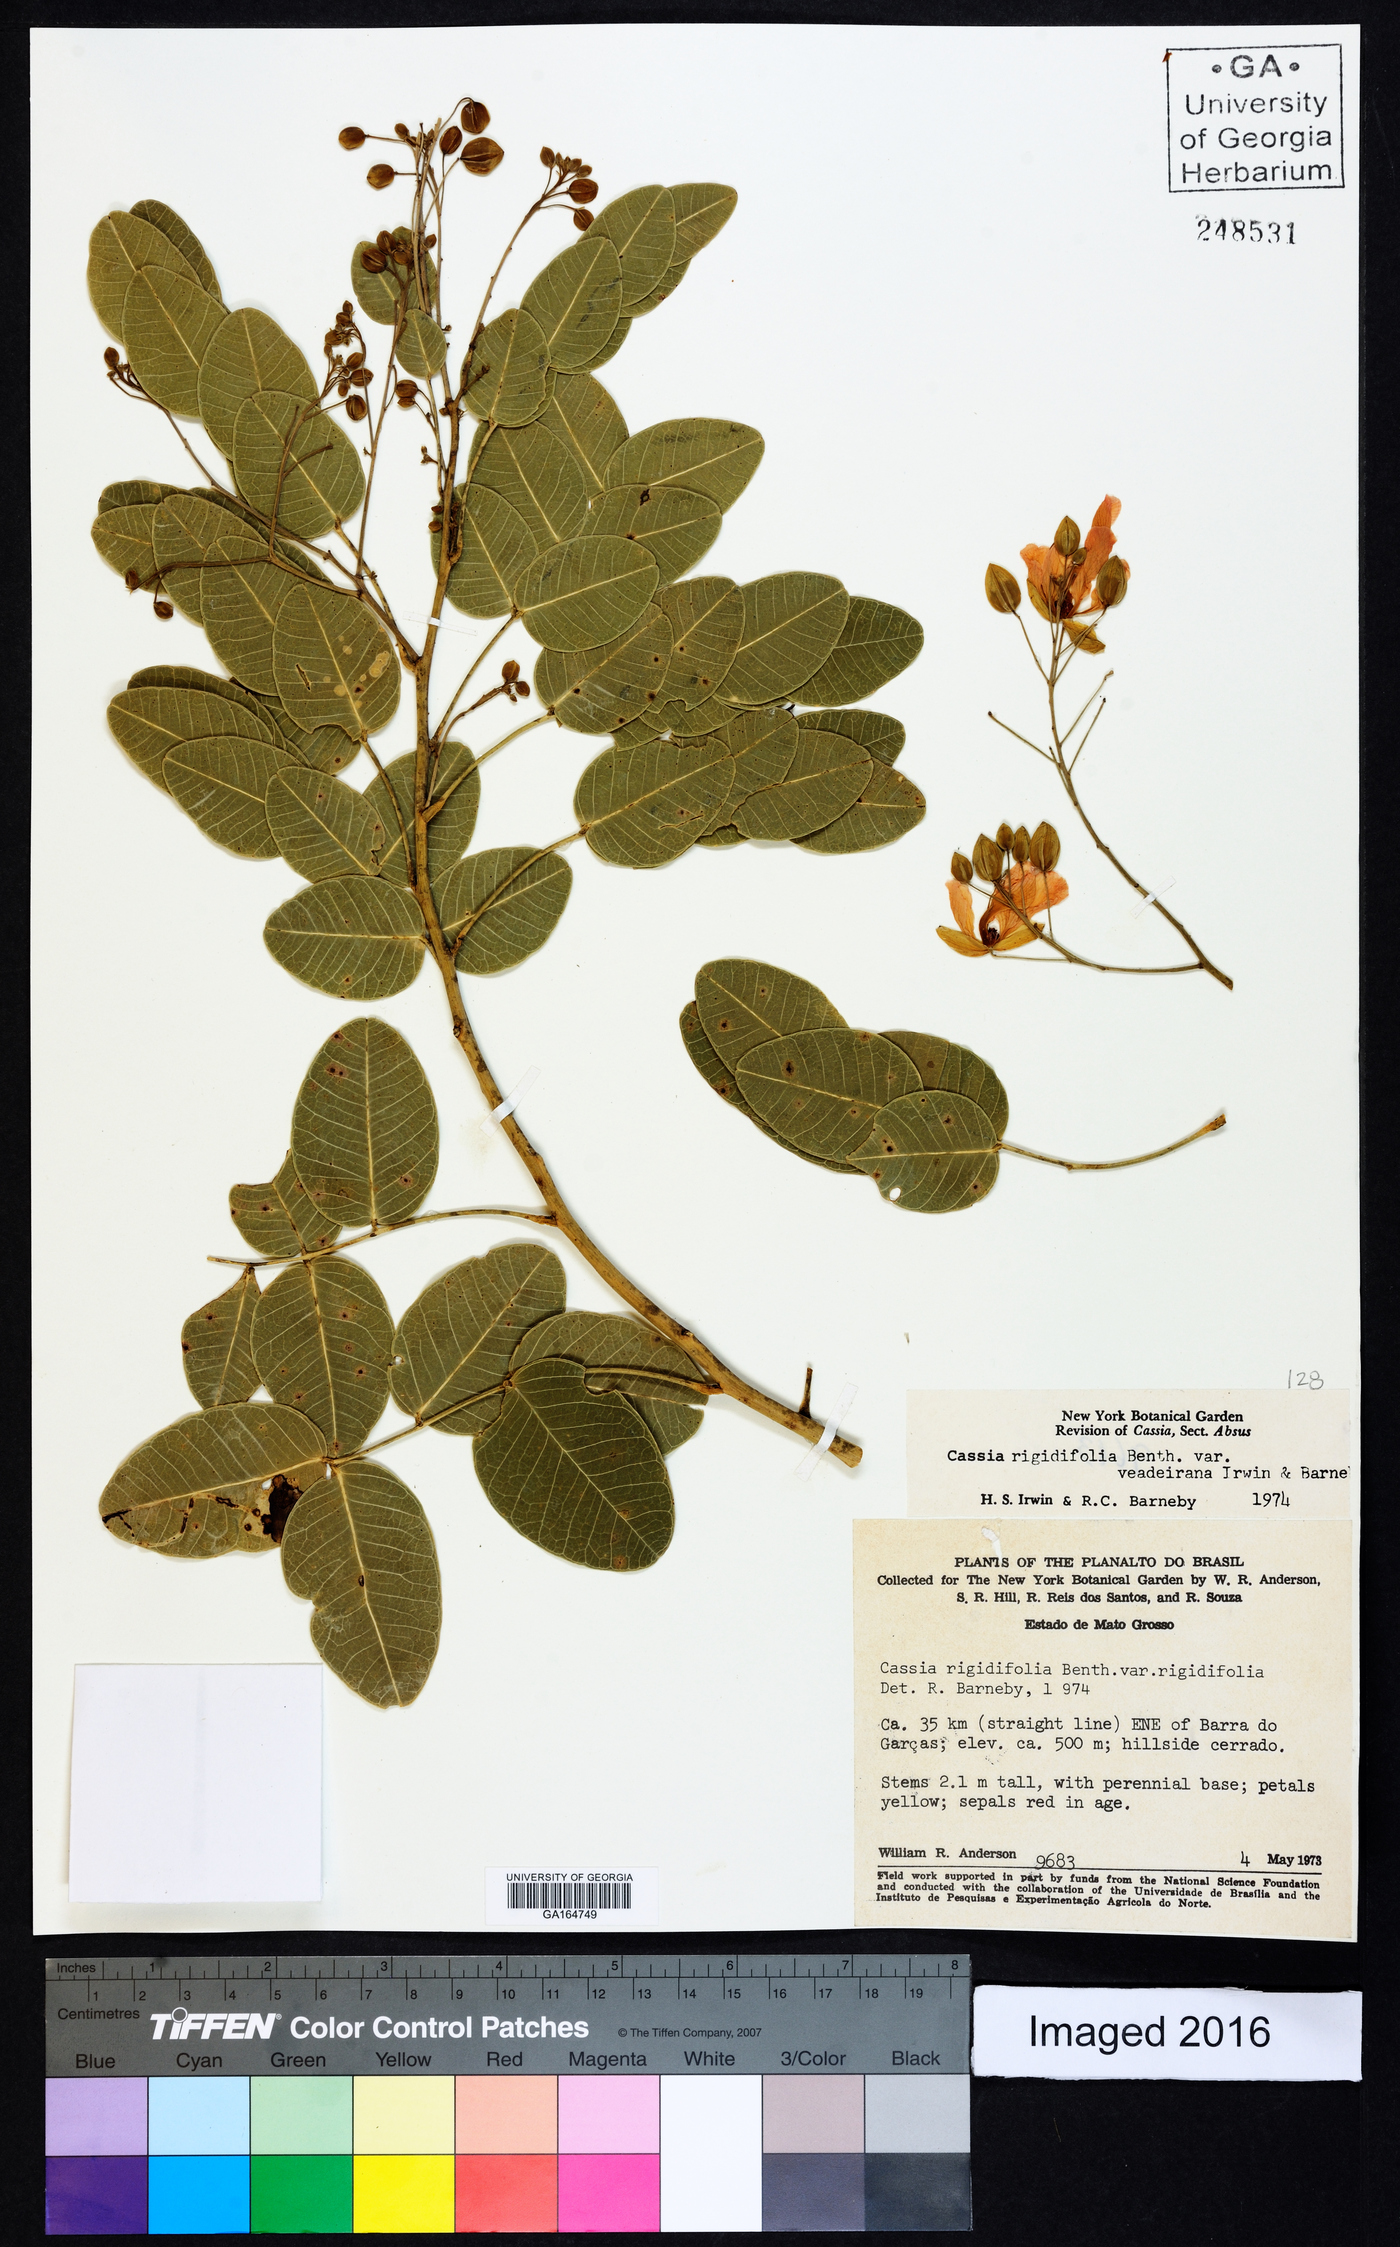 Chamaecrista rigidifolia var. veadeirana image